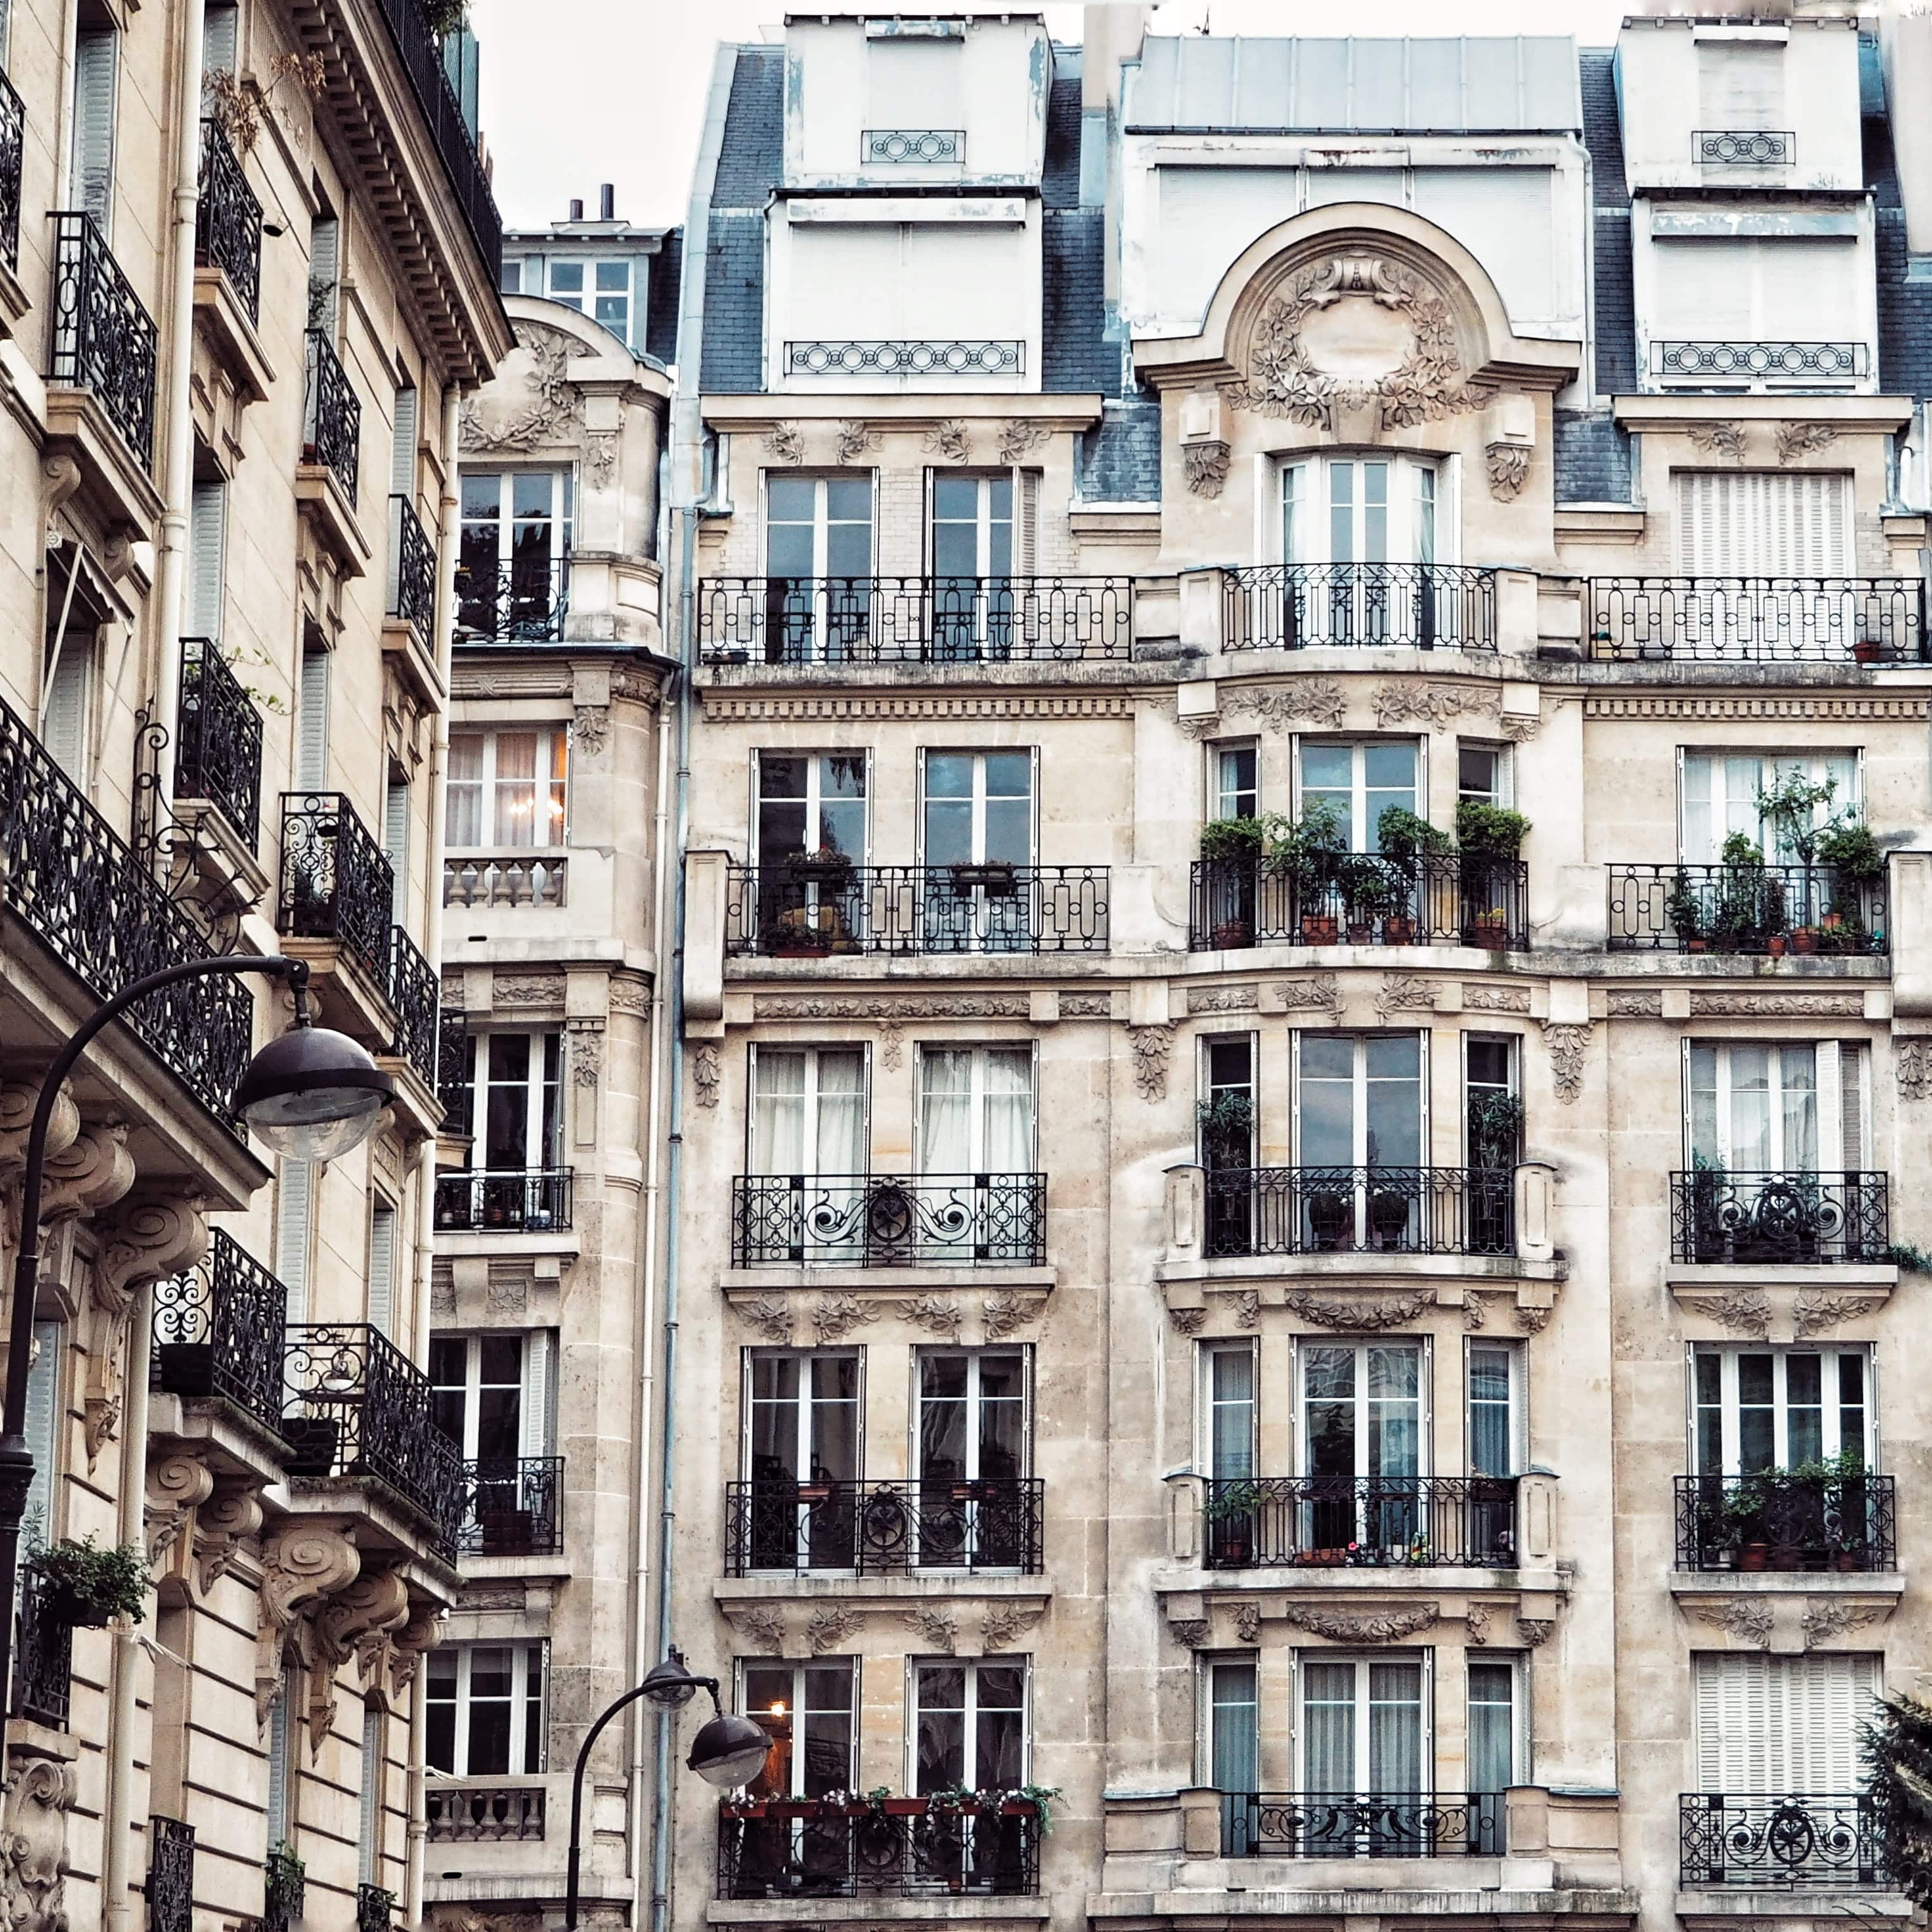  Luxury  real estate  Paris  prices continue to increase 